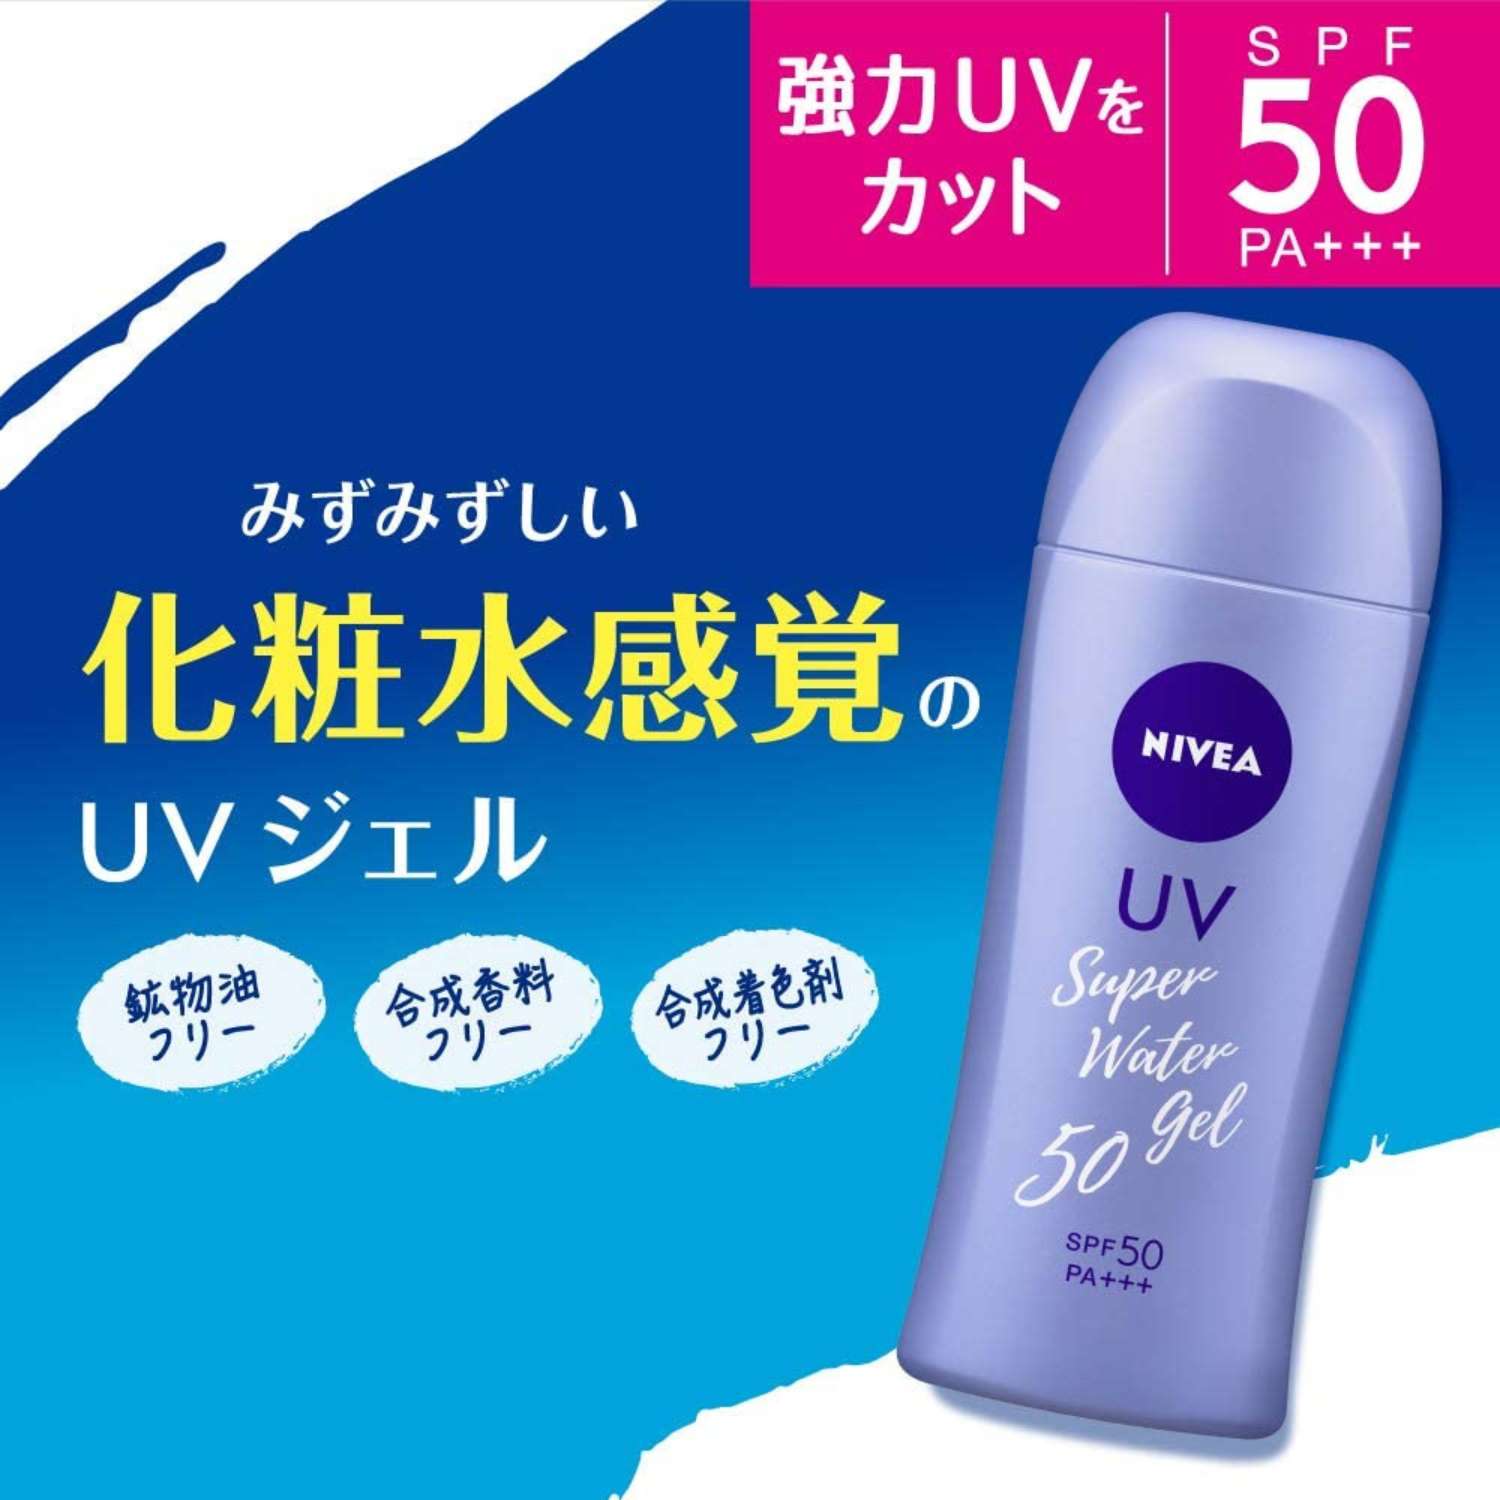 Nivea Japan Super Water Gel SPF 50 PA+++ 160g - Buy Me Japan